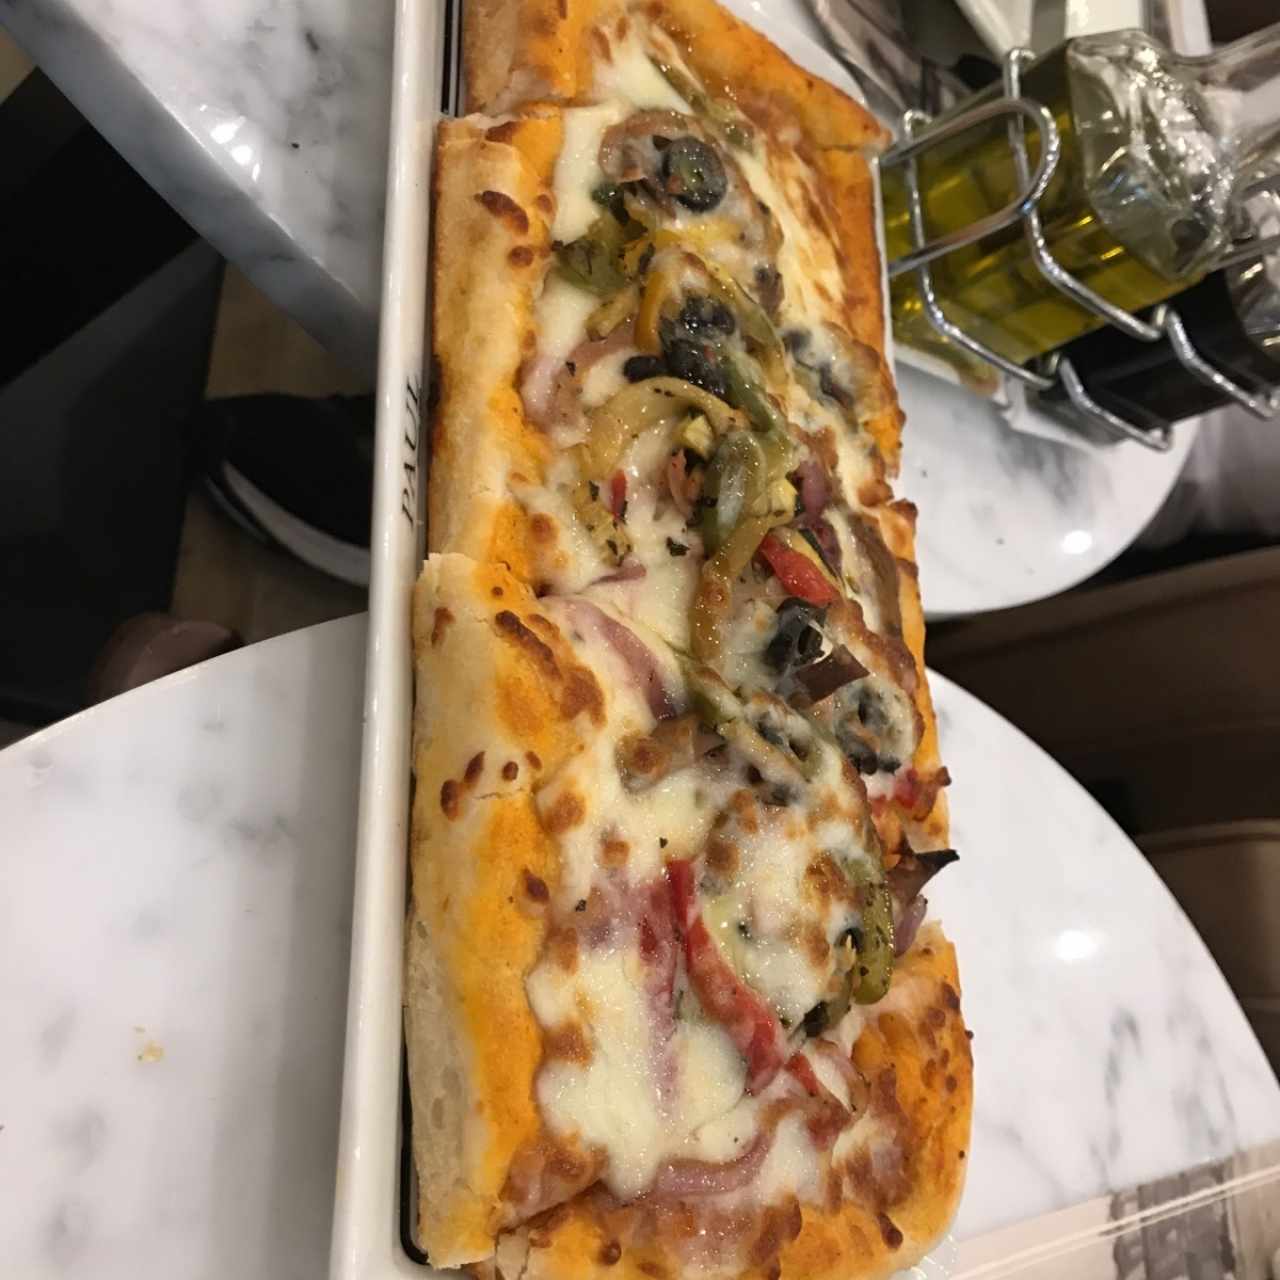 pizza vegetariano